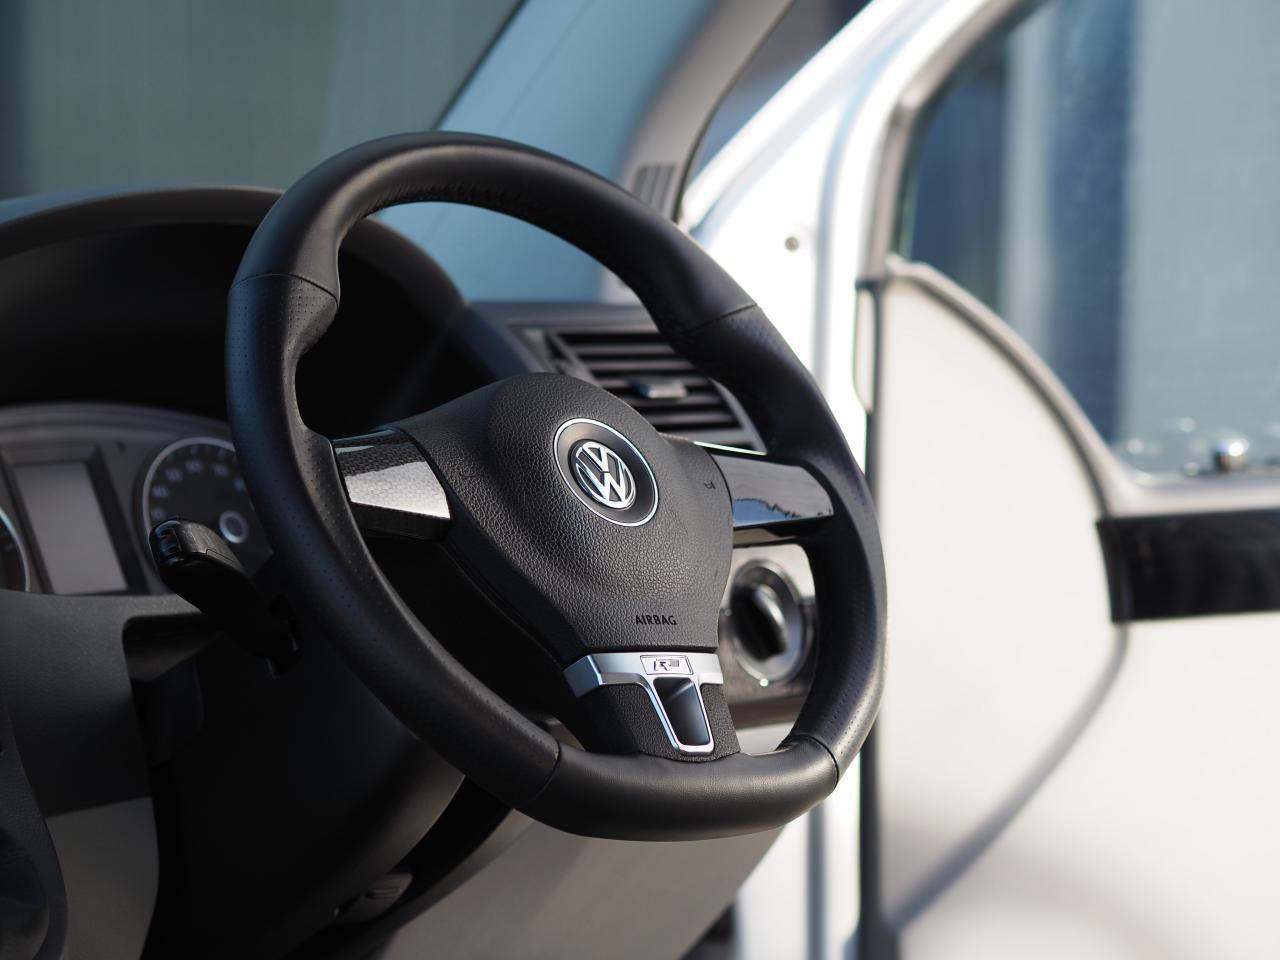 VW T5.1 Steering Wheel - Leather